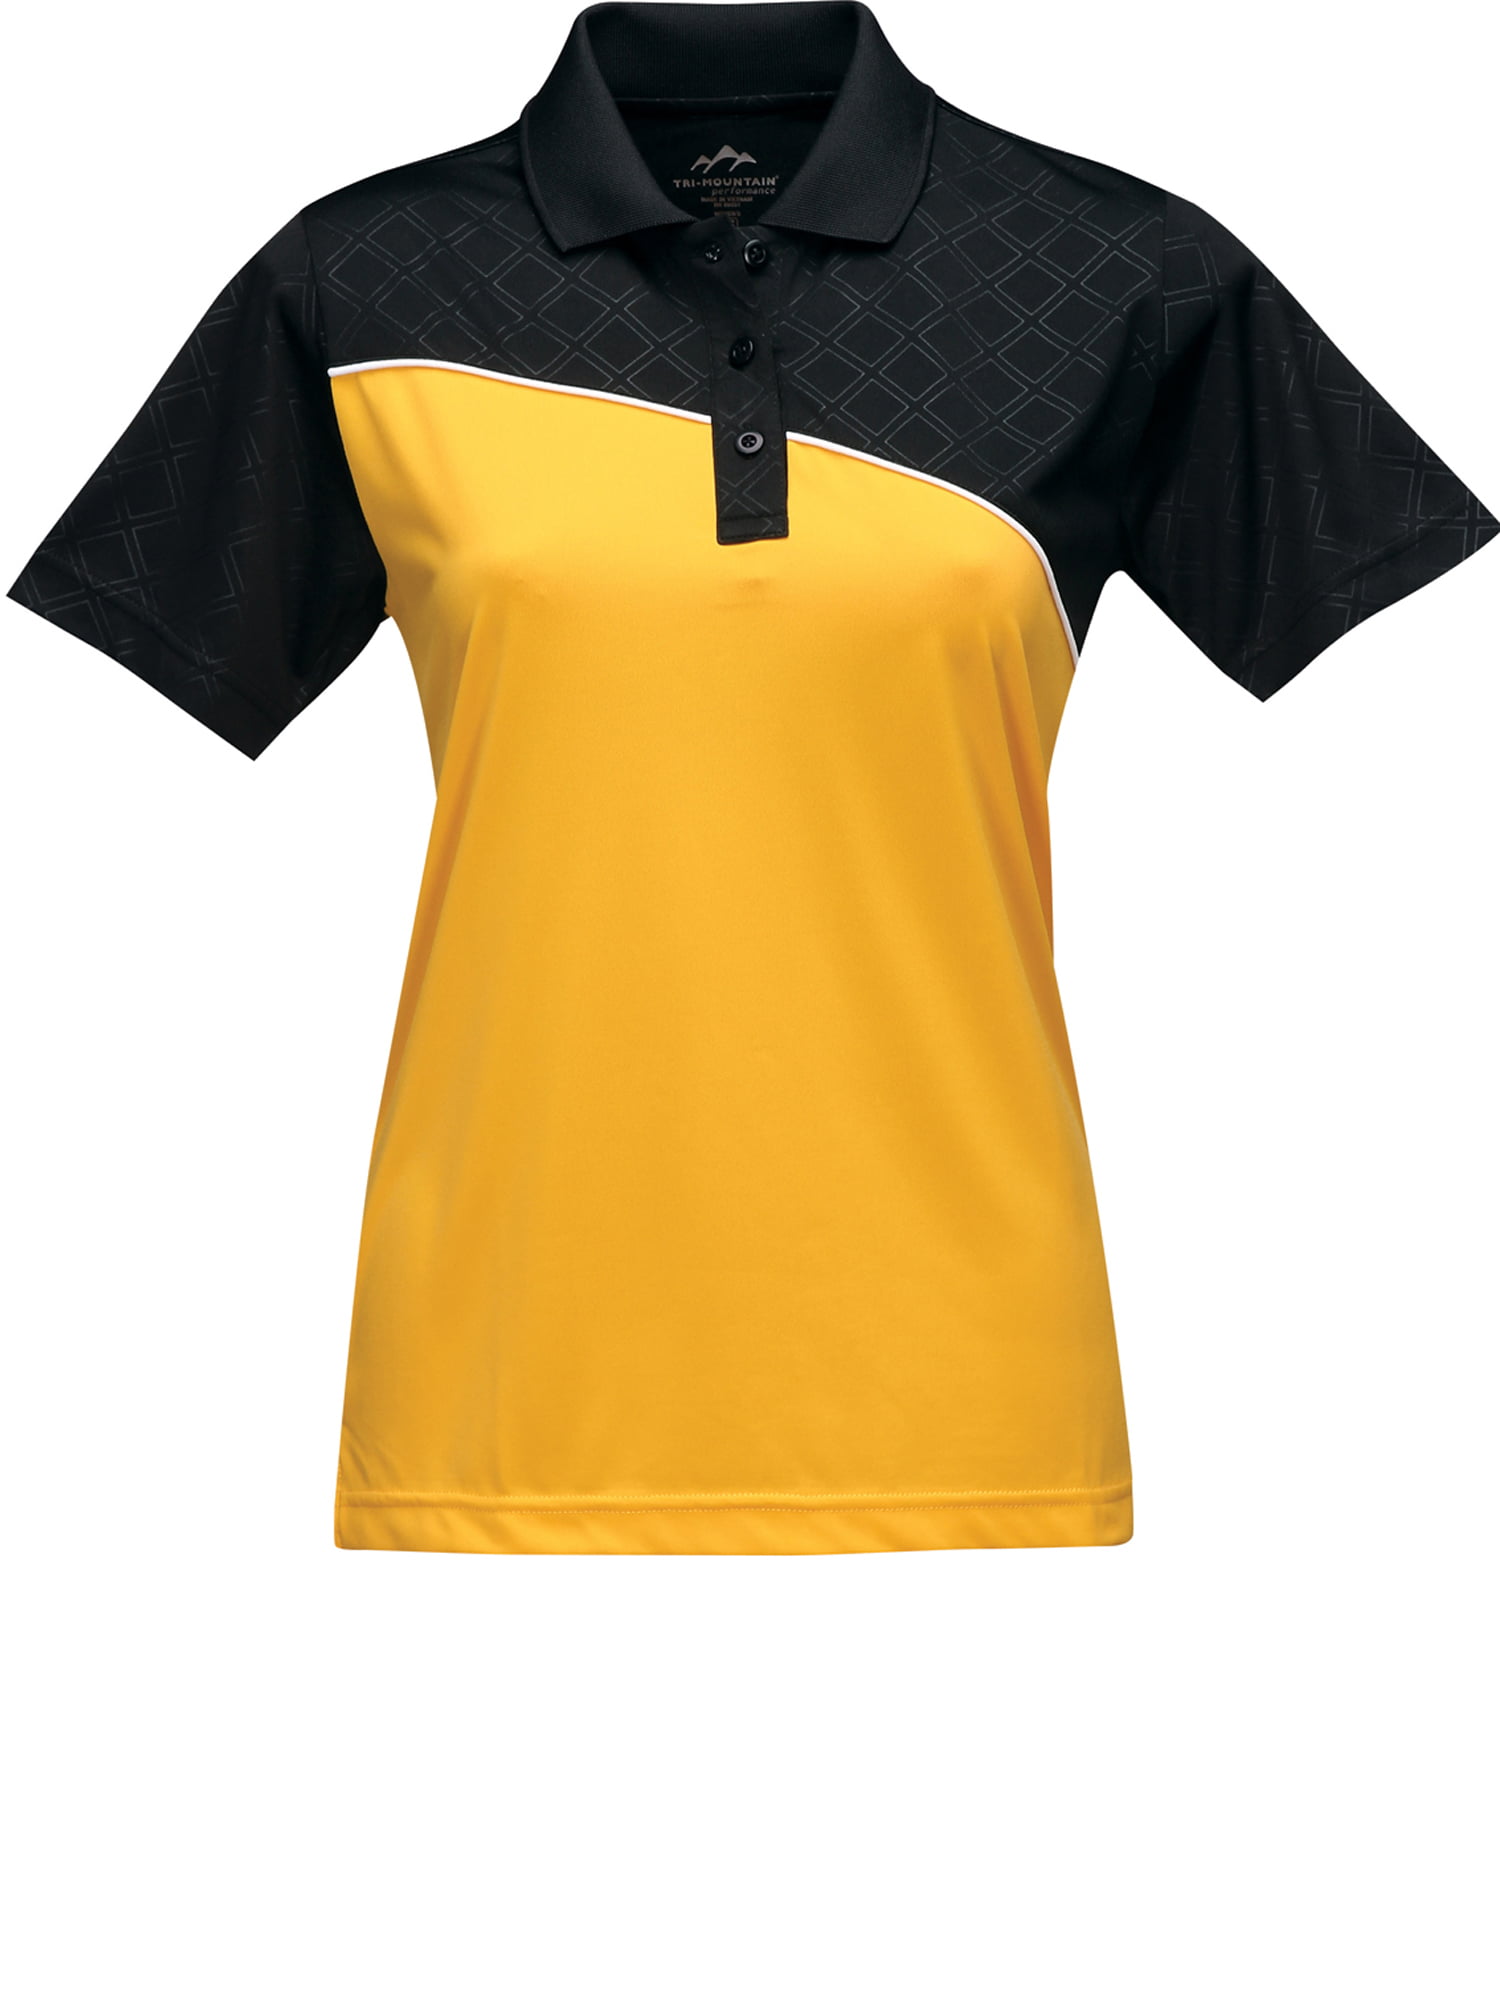 black and white women's polo shirt